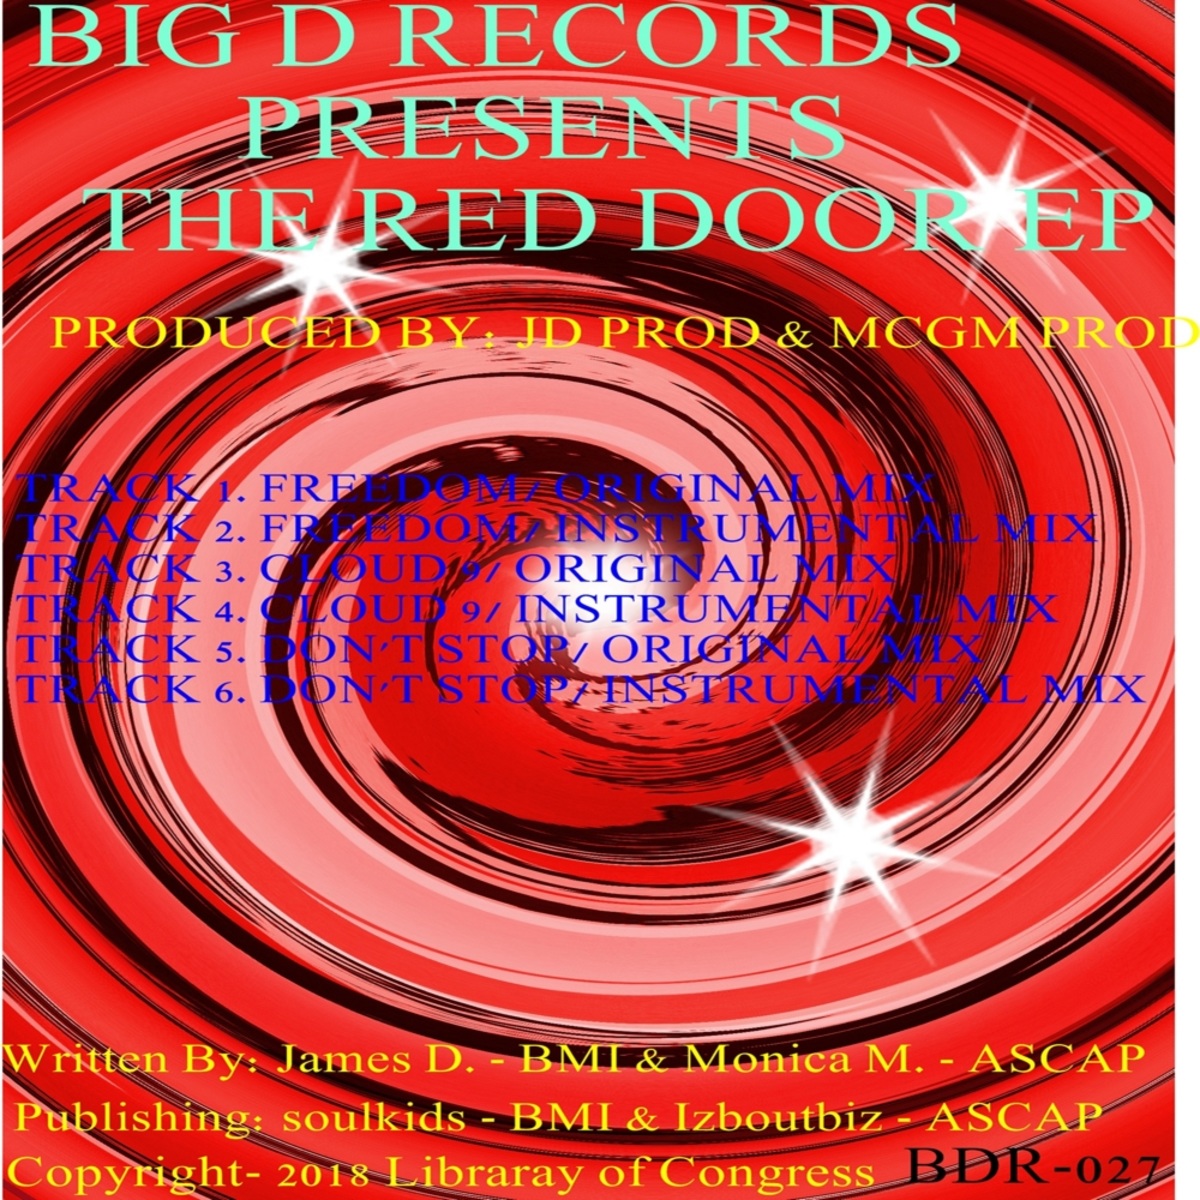 JD Prod, MCGM Prod - The Red Door EP / Big D Records